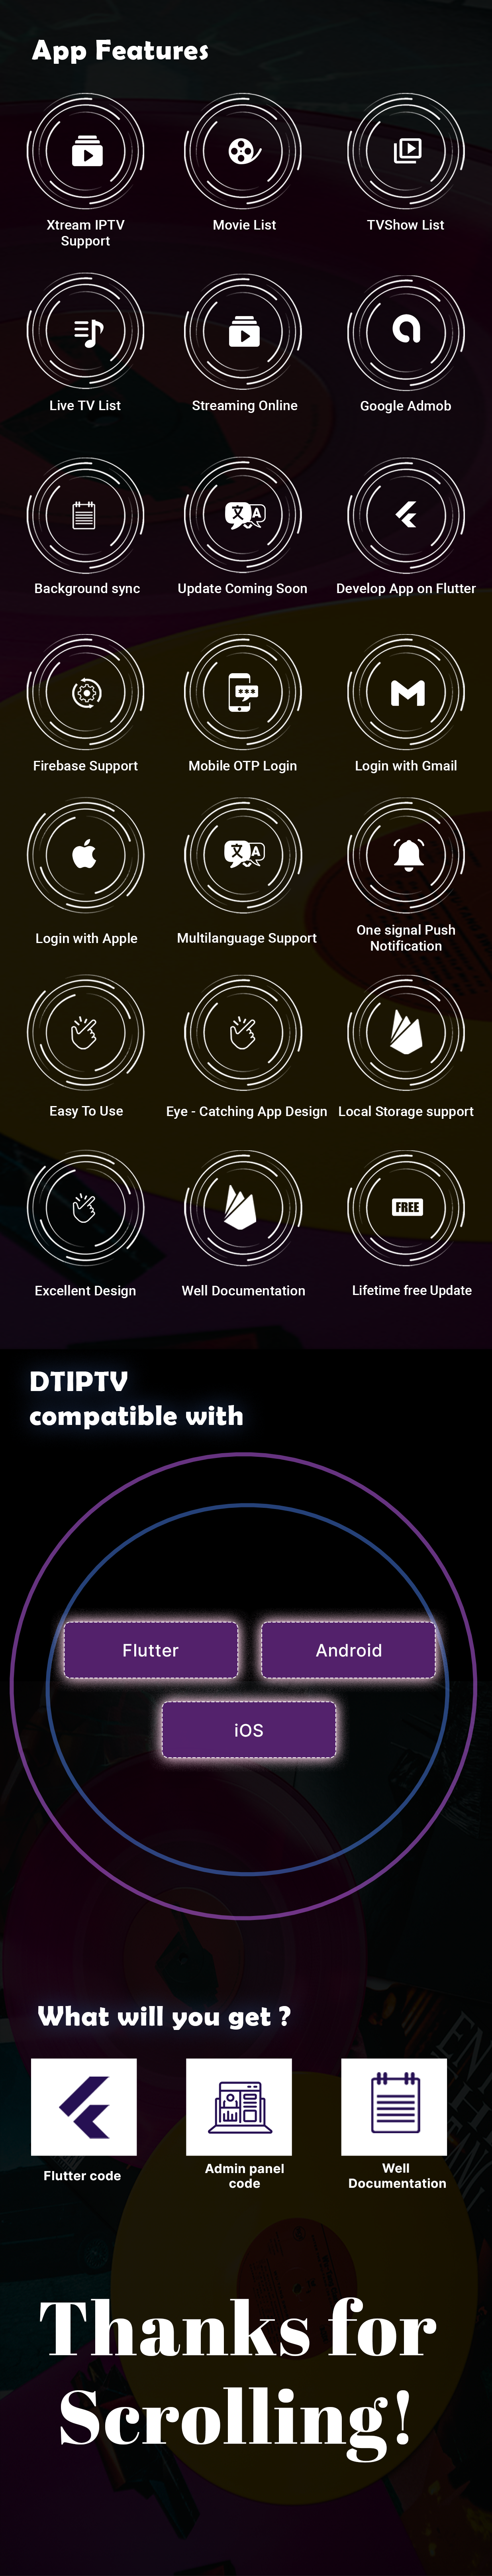 DTIPTV - Ultimate IPTV Flutter App for Android & iOS - 10